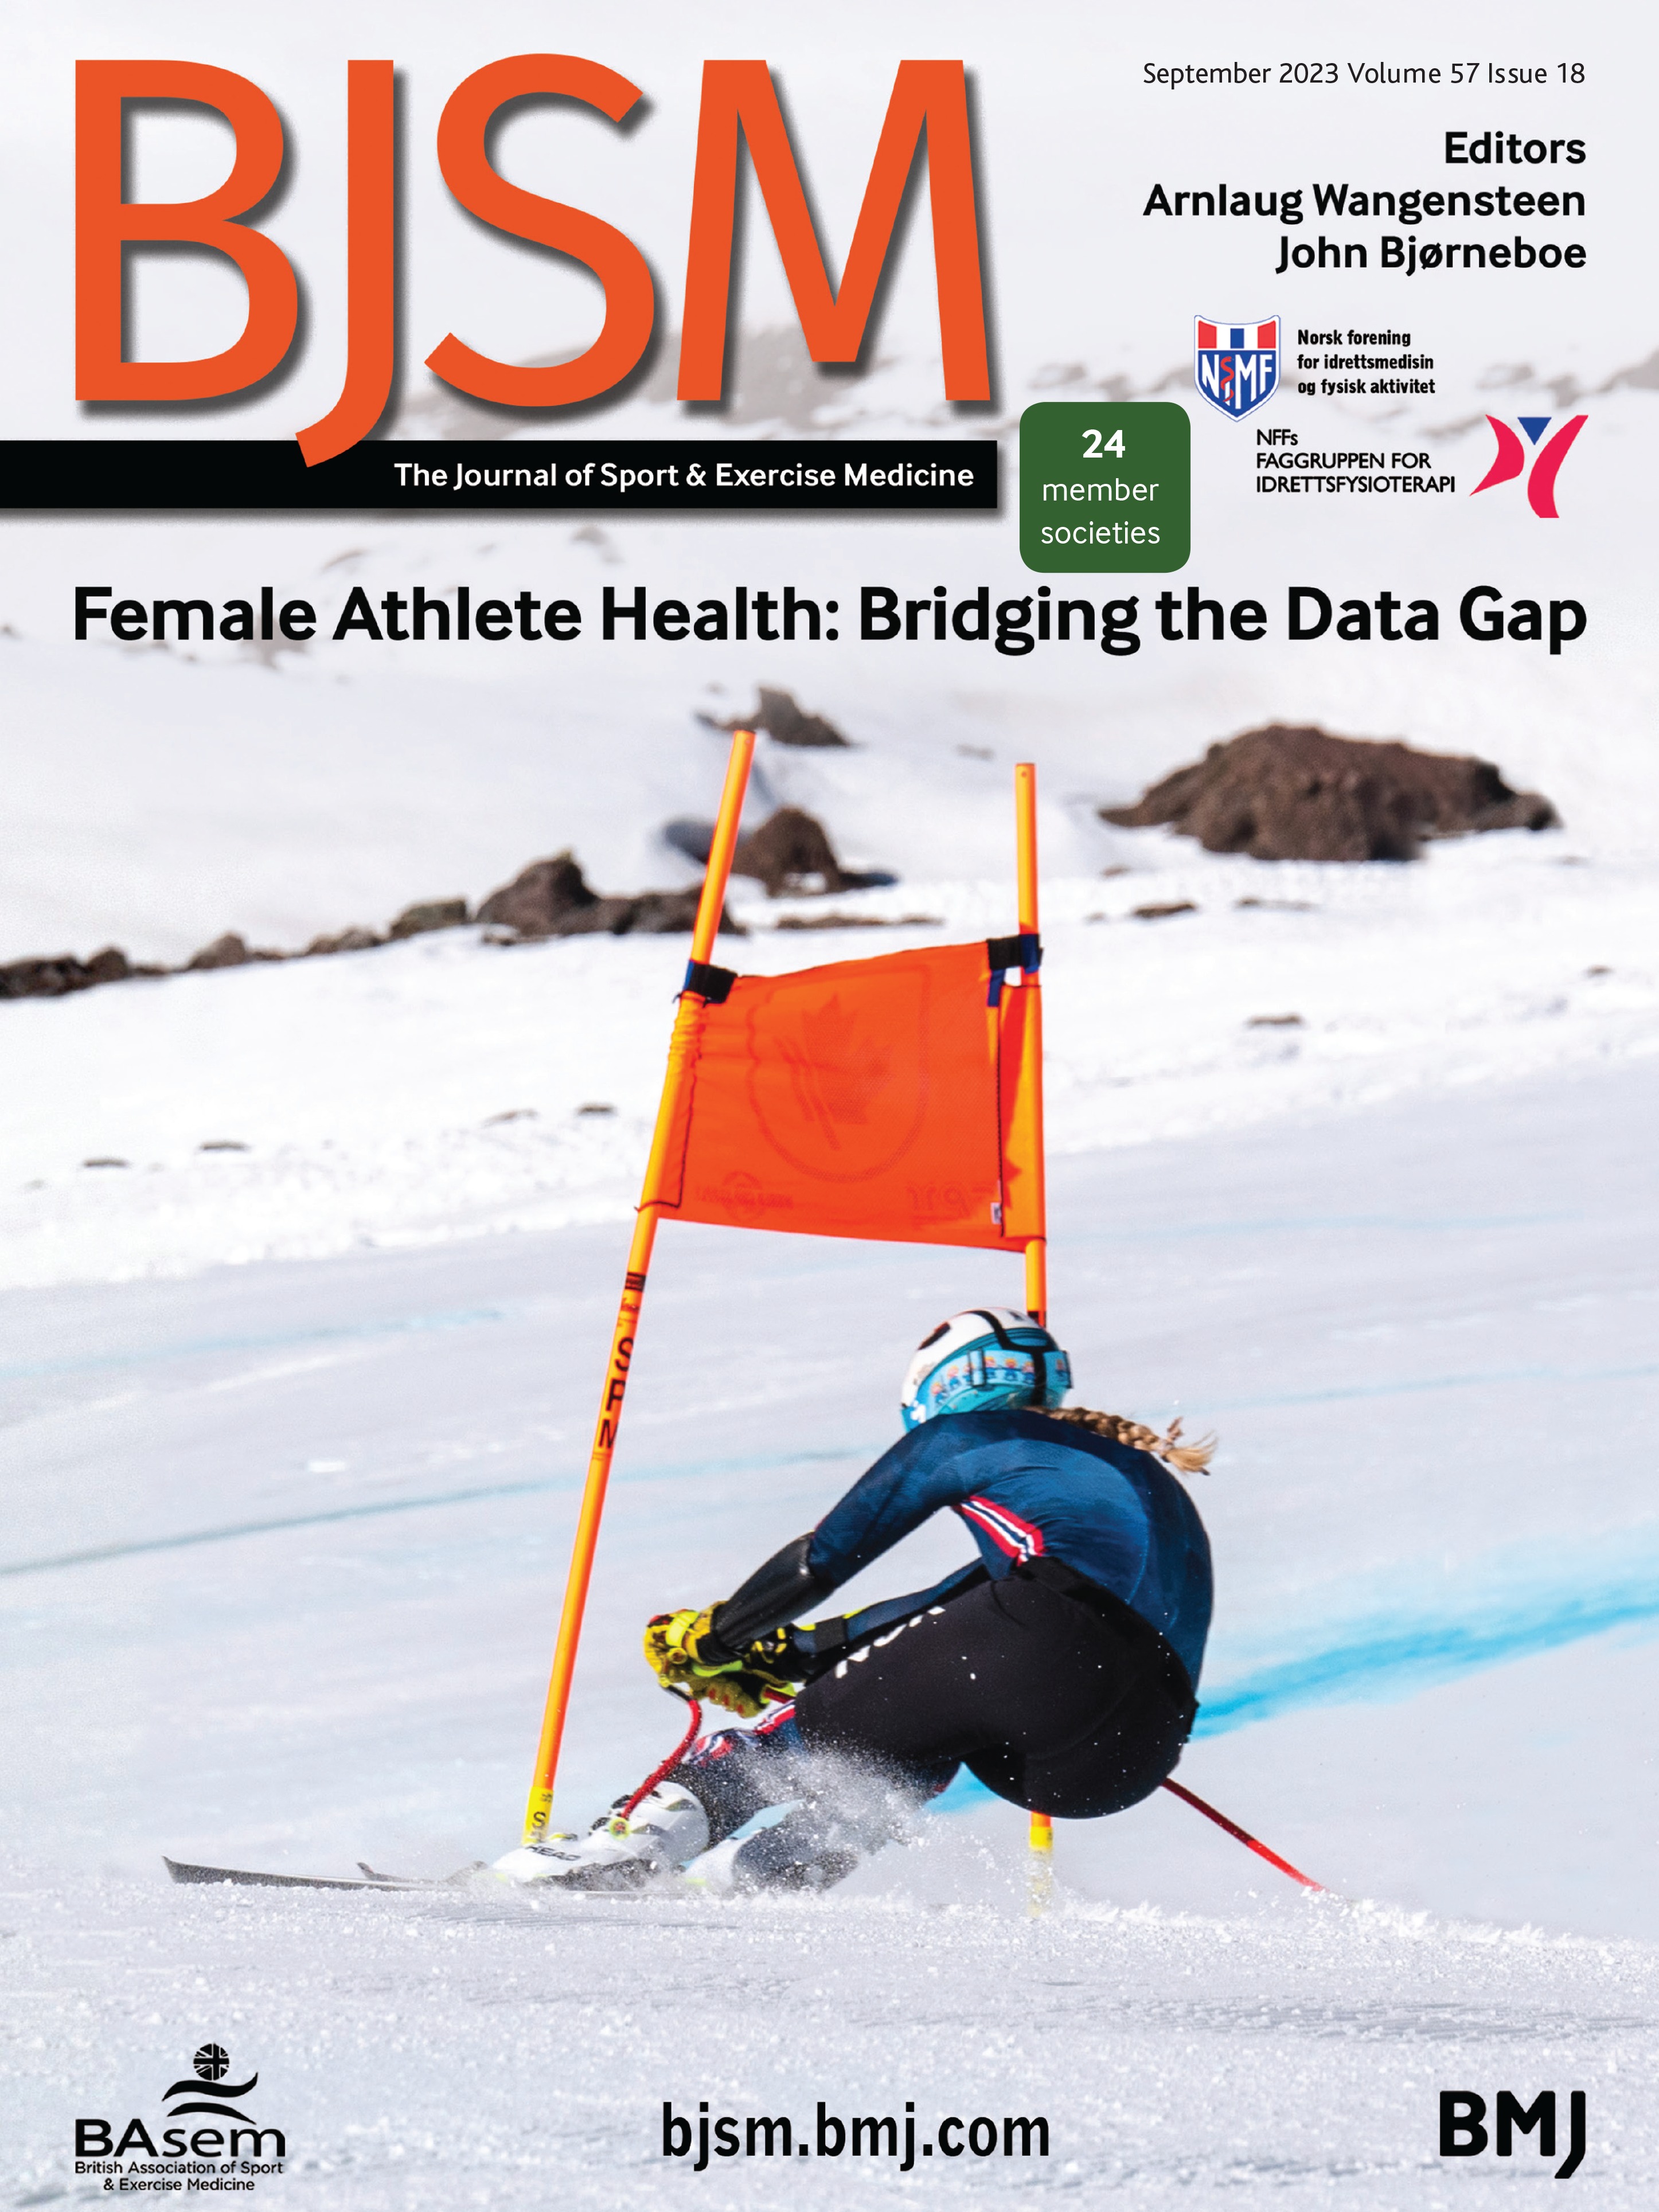 Female athlete health: bridging the data gap